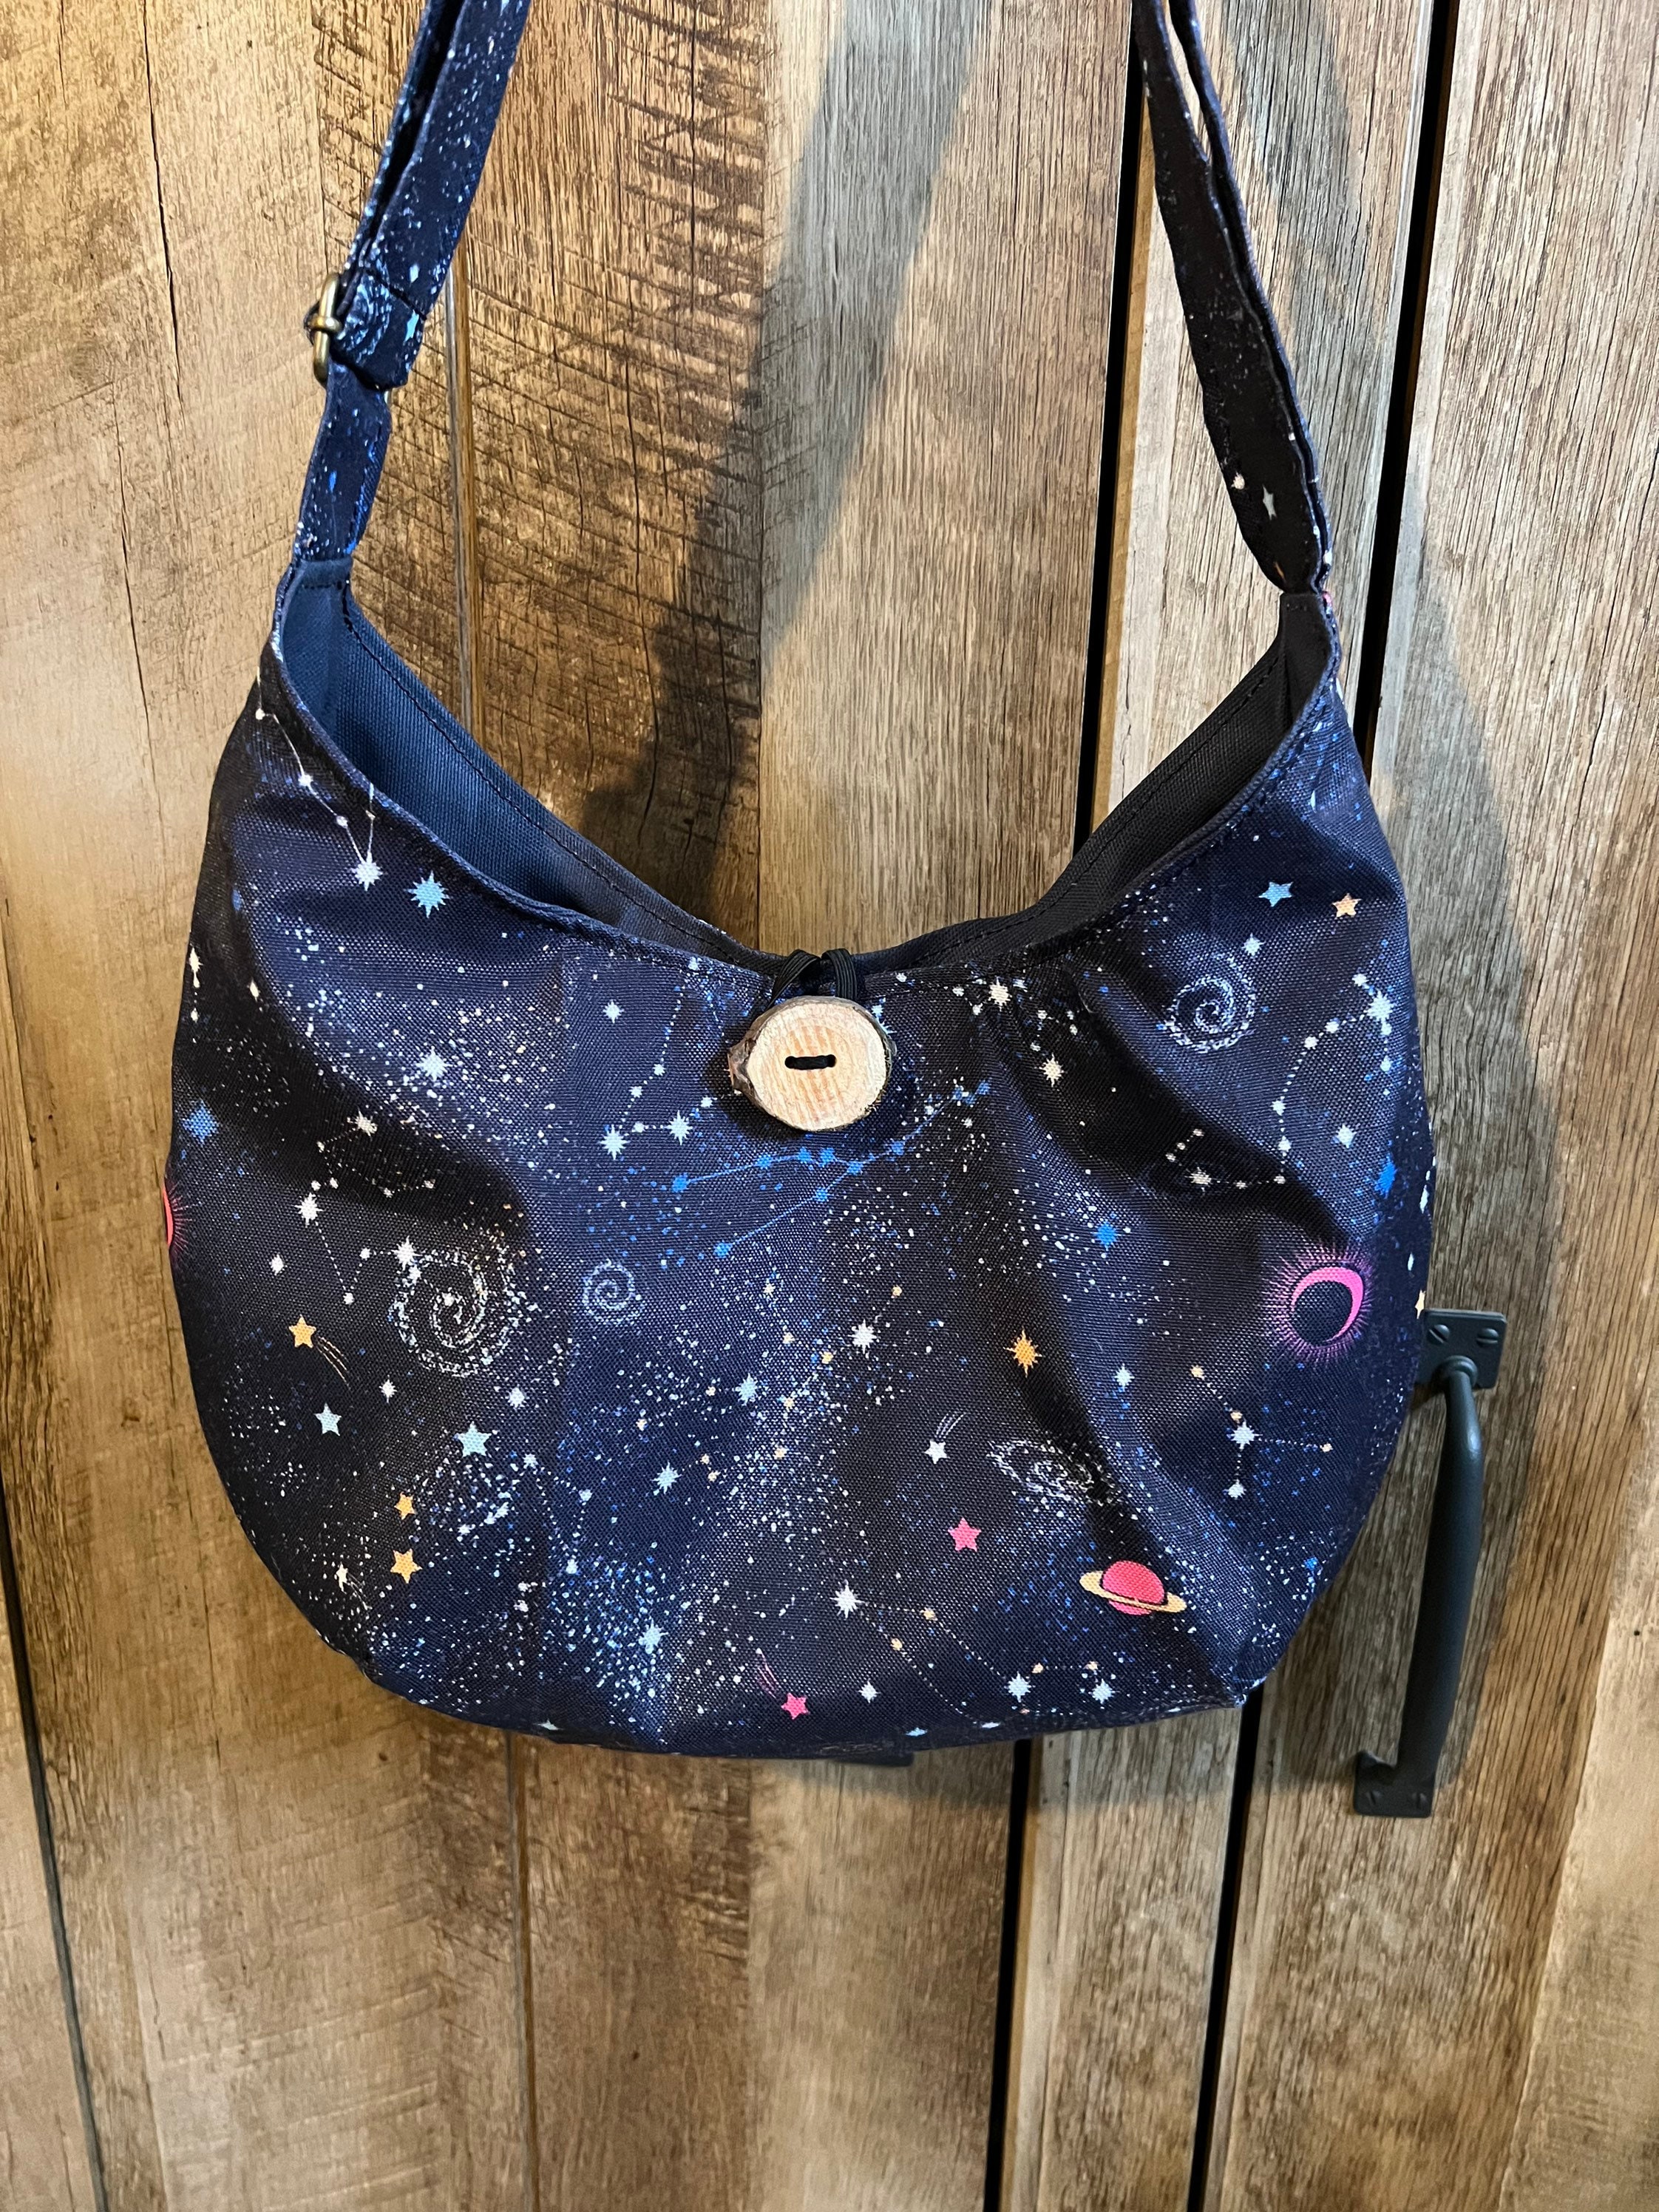 Cosmos Leather Hobo Bag with Adjustable Handle - Ecstatic Bags